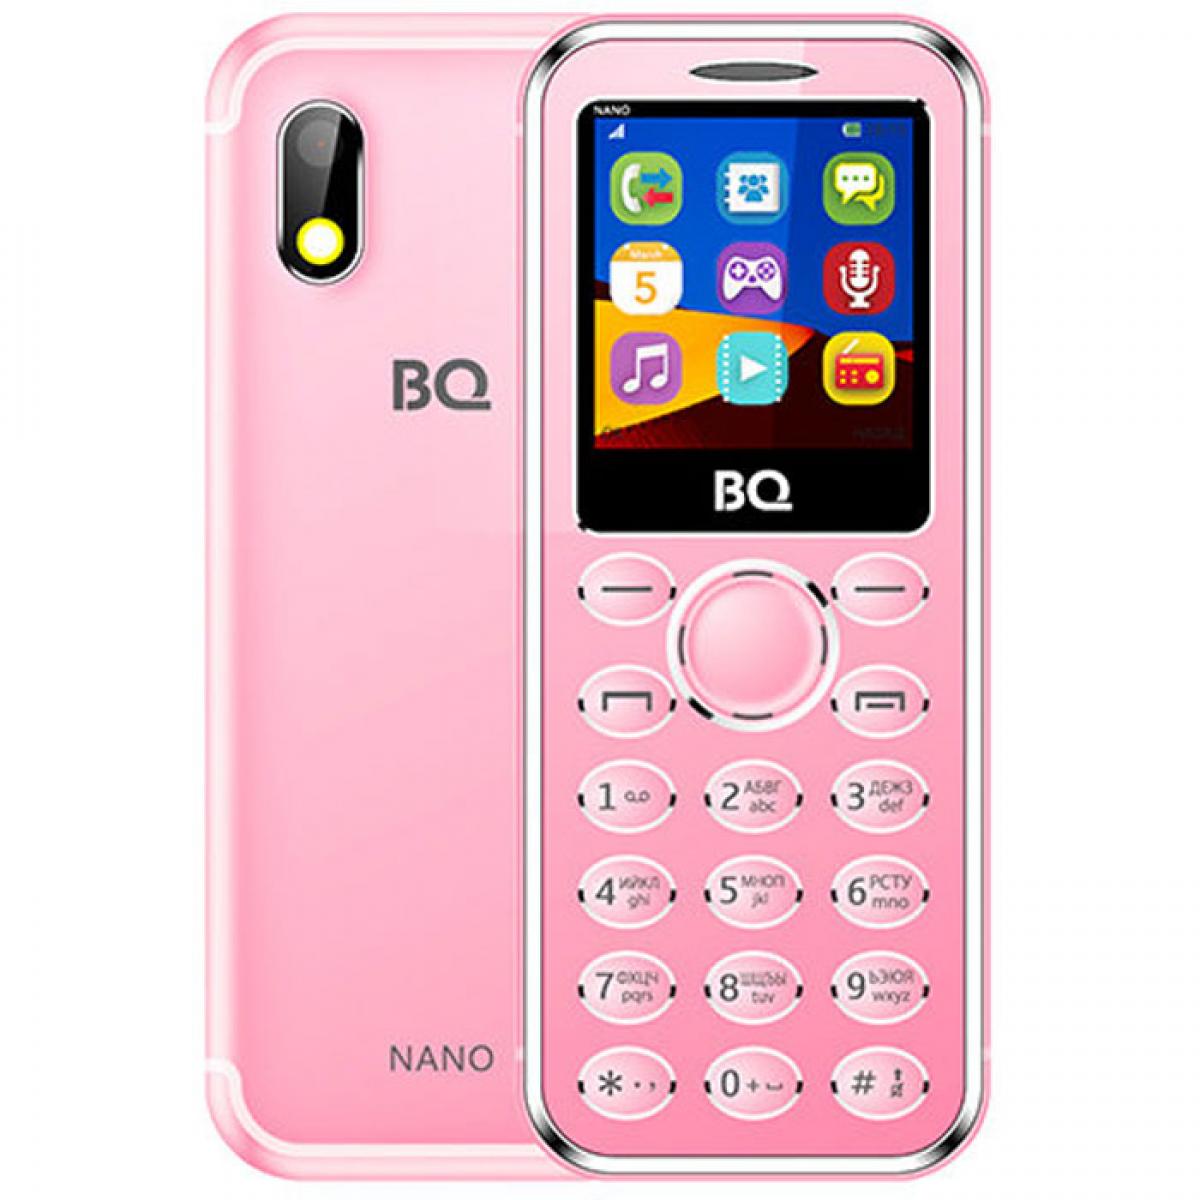 Дешевые телефоны тюмень. BQ 1411 Nano. BQ 1411 Nano Silver. BQ BQ-1411 Nano. Телефон BQ 1411 Nano.